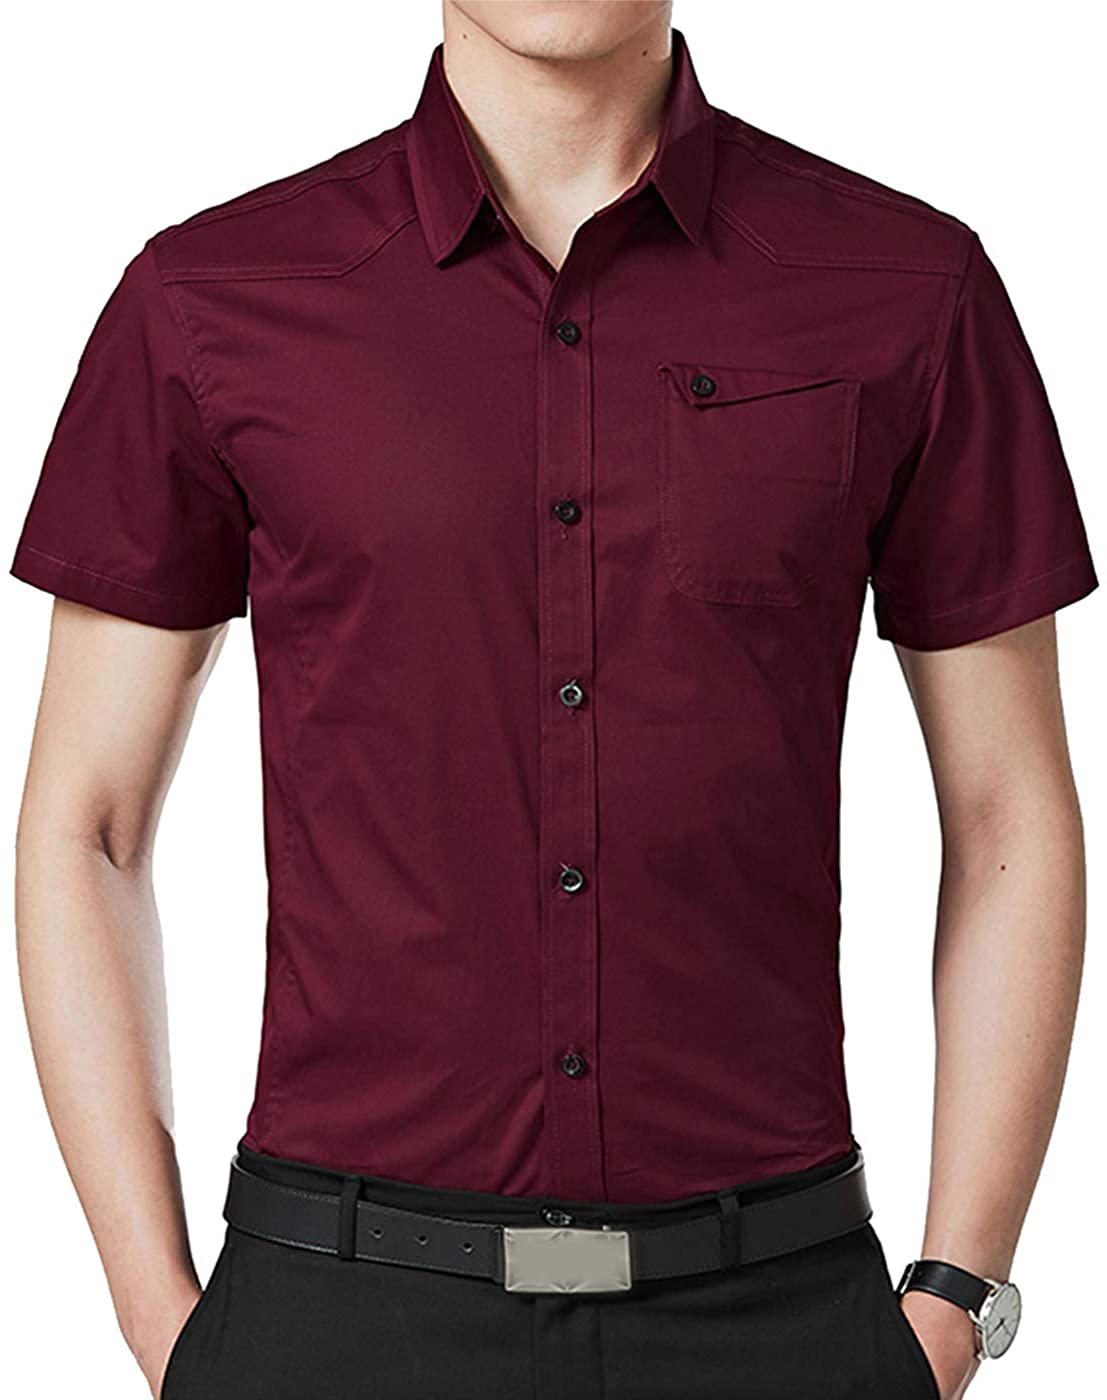 XTAPAN Men's Casual Slim Fit Shirt Cotton Long Sleeve Button Down Dress ...